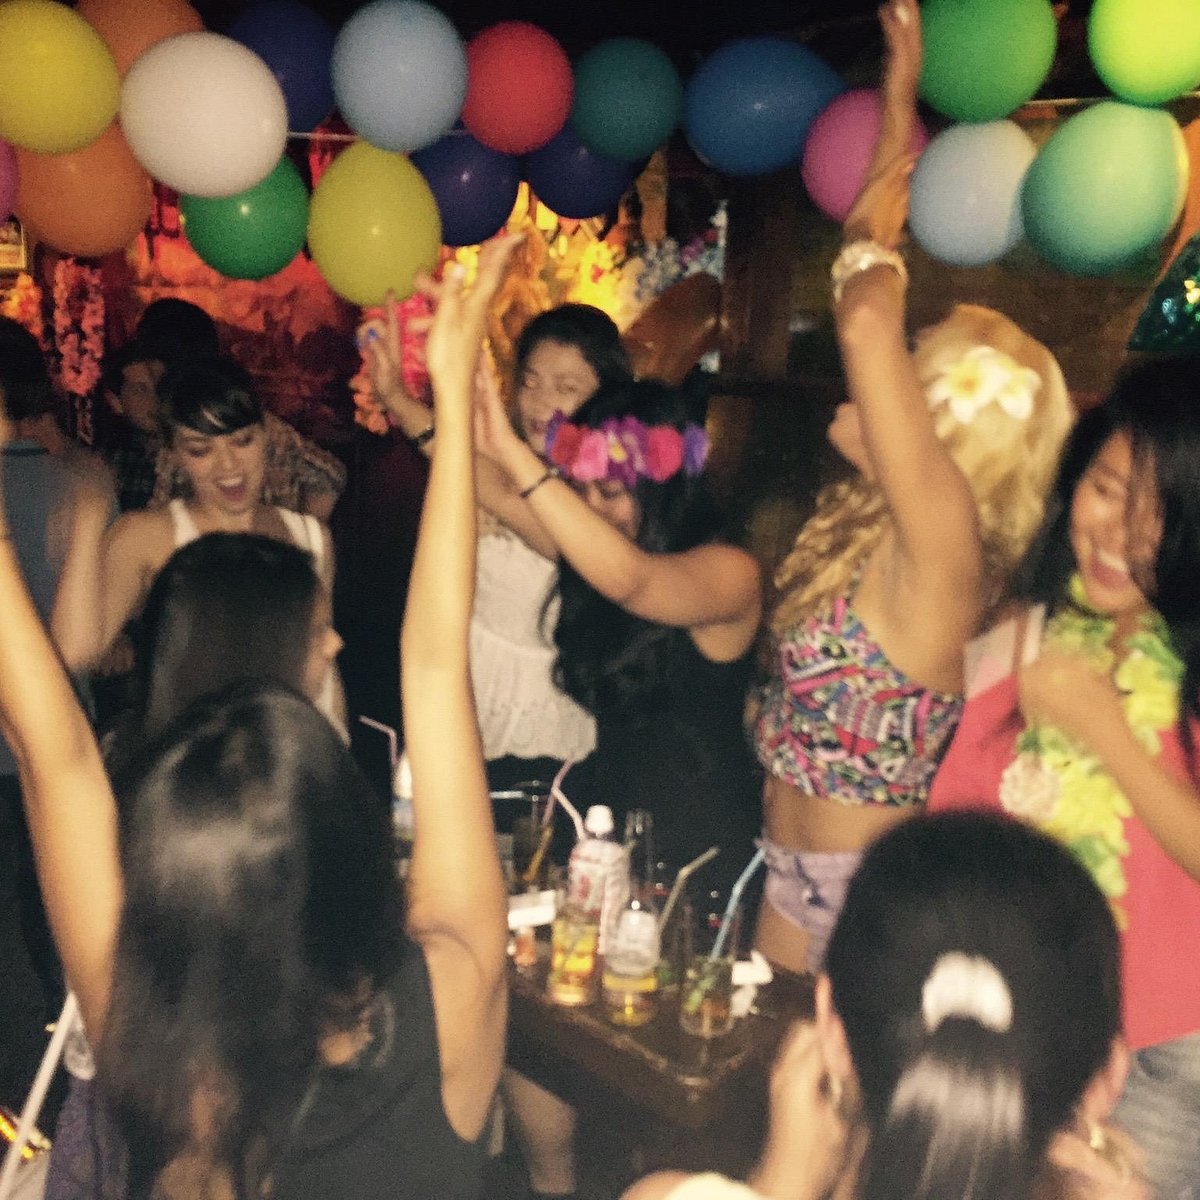 auric goldfinger recommends Thai Bar Girls Tumblr